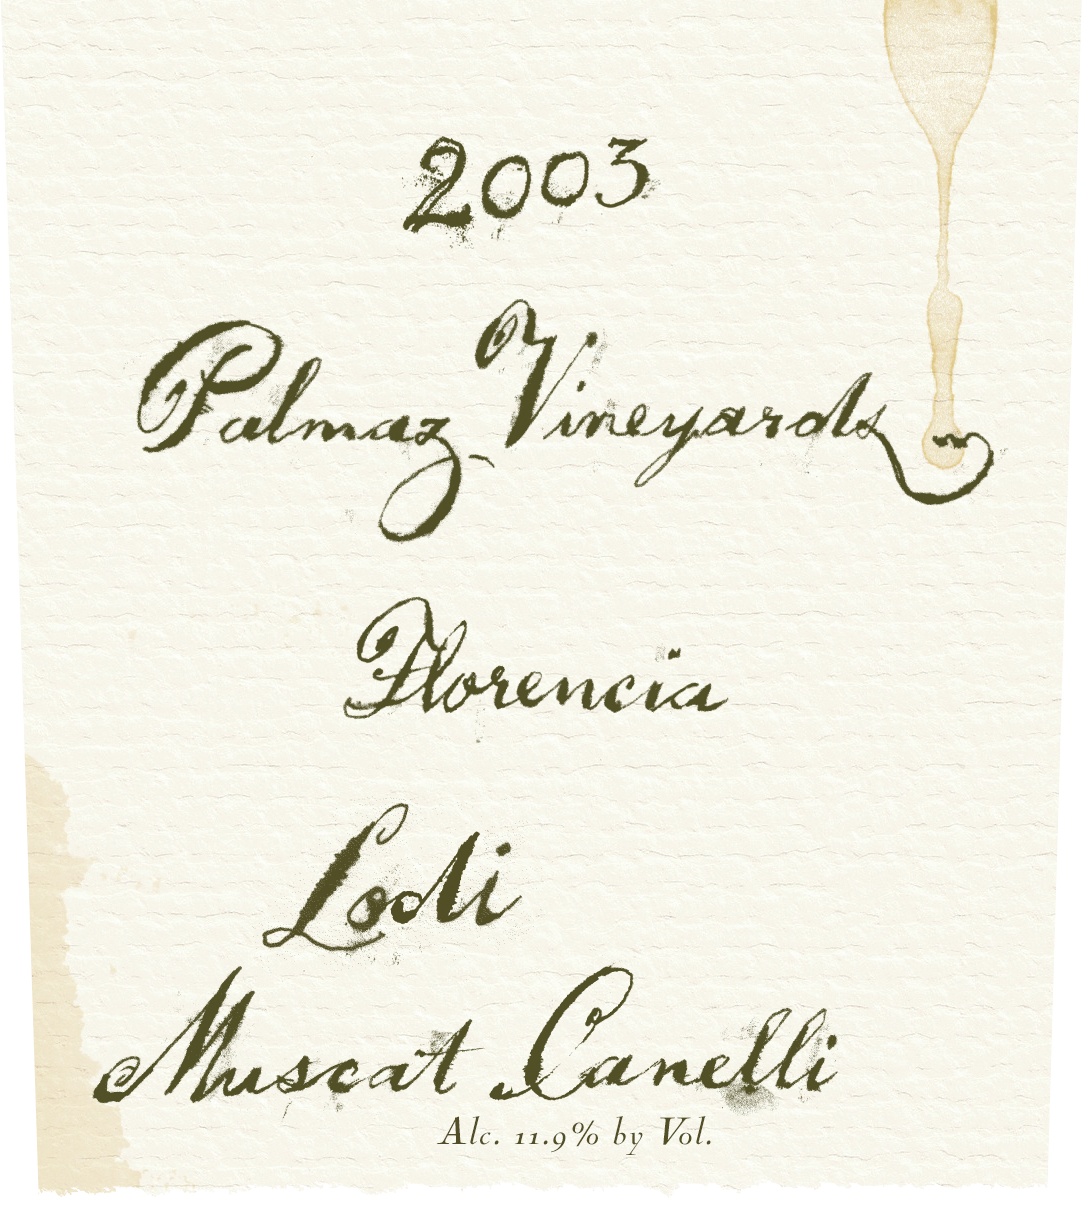 2003 Label